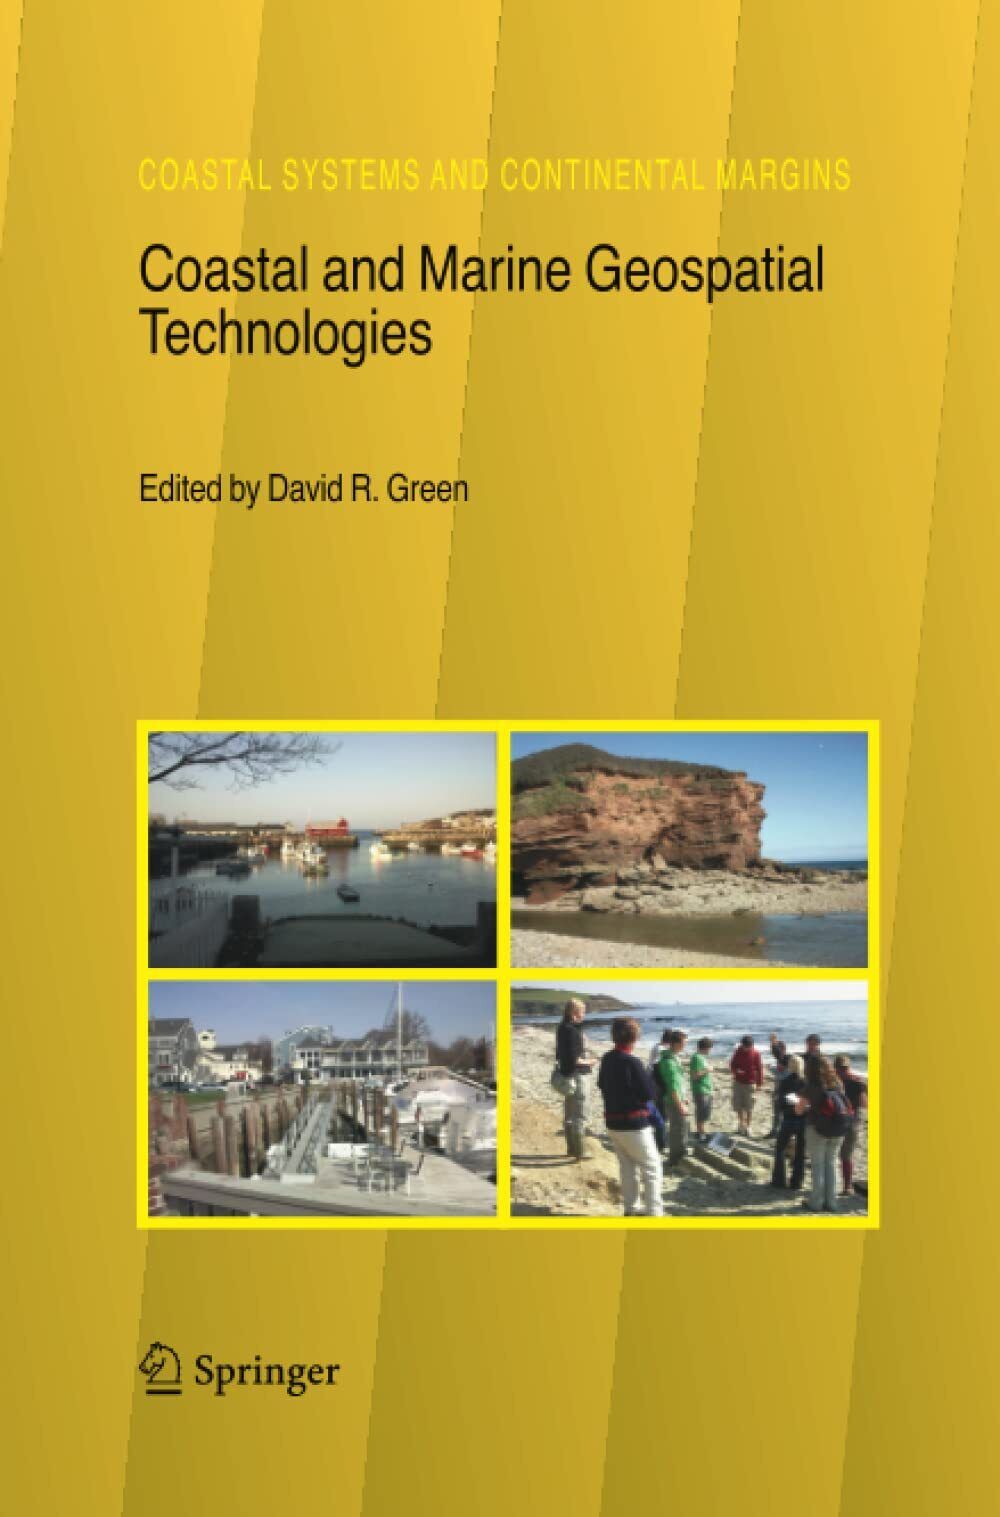 Coastal and Marine Geospatial Technologies - D.R. Green - Springer, 2012